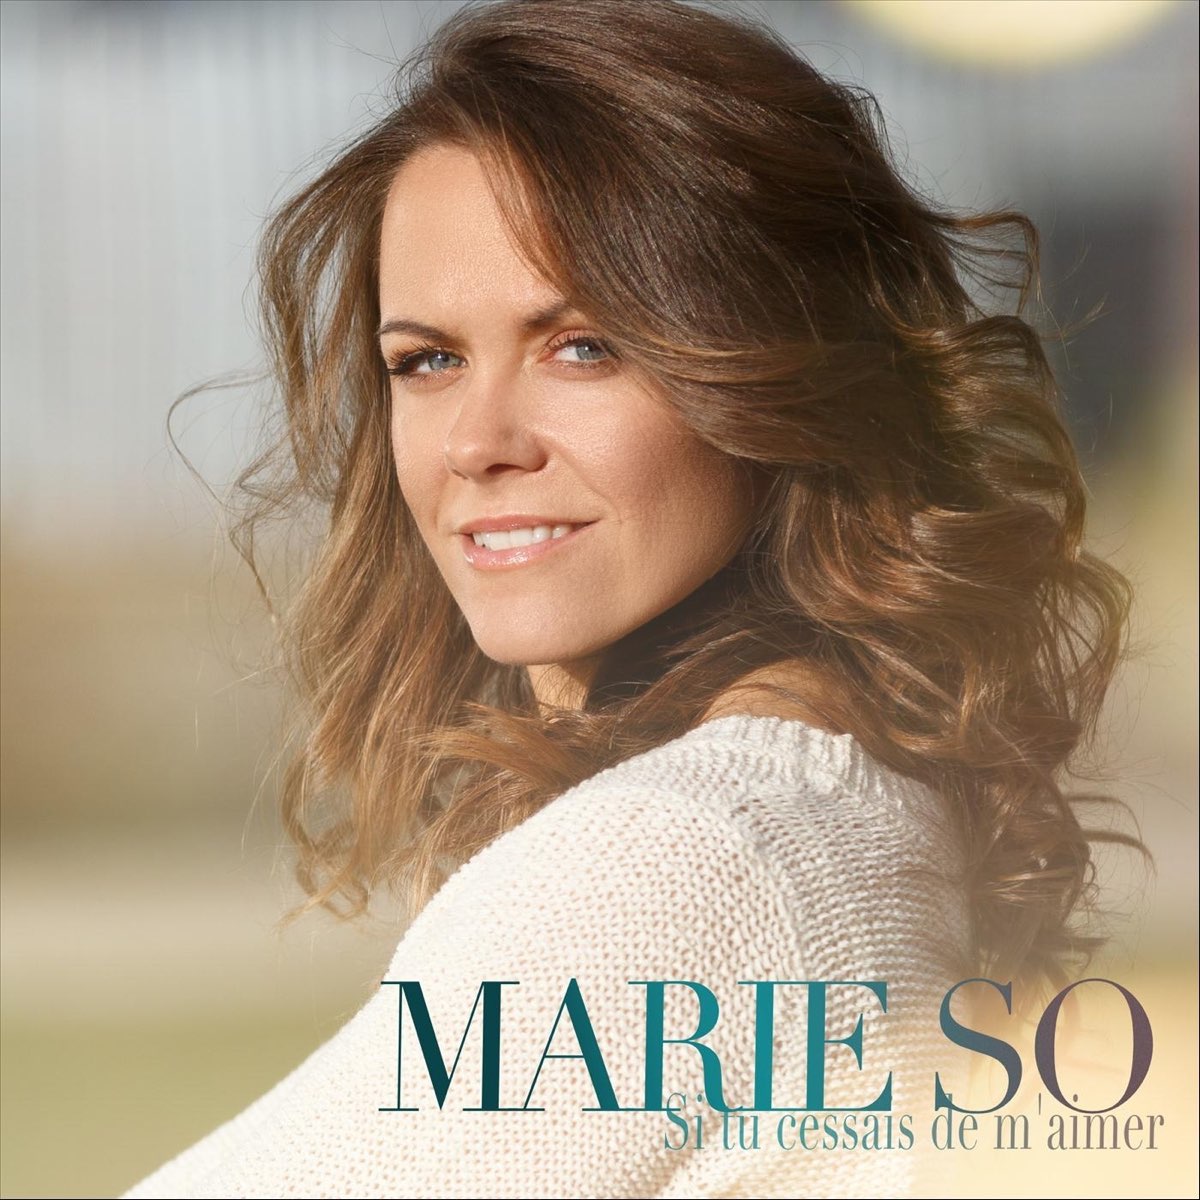 Song marie. Maria_so youtube.